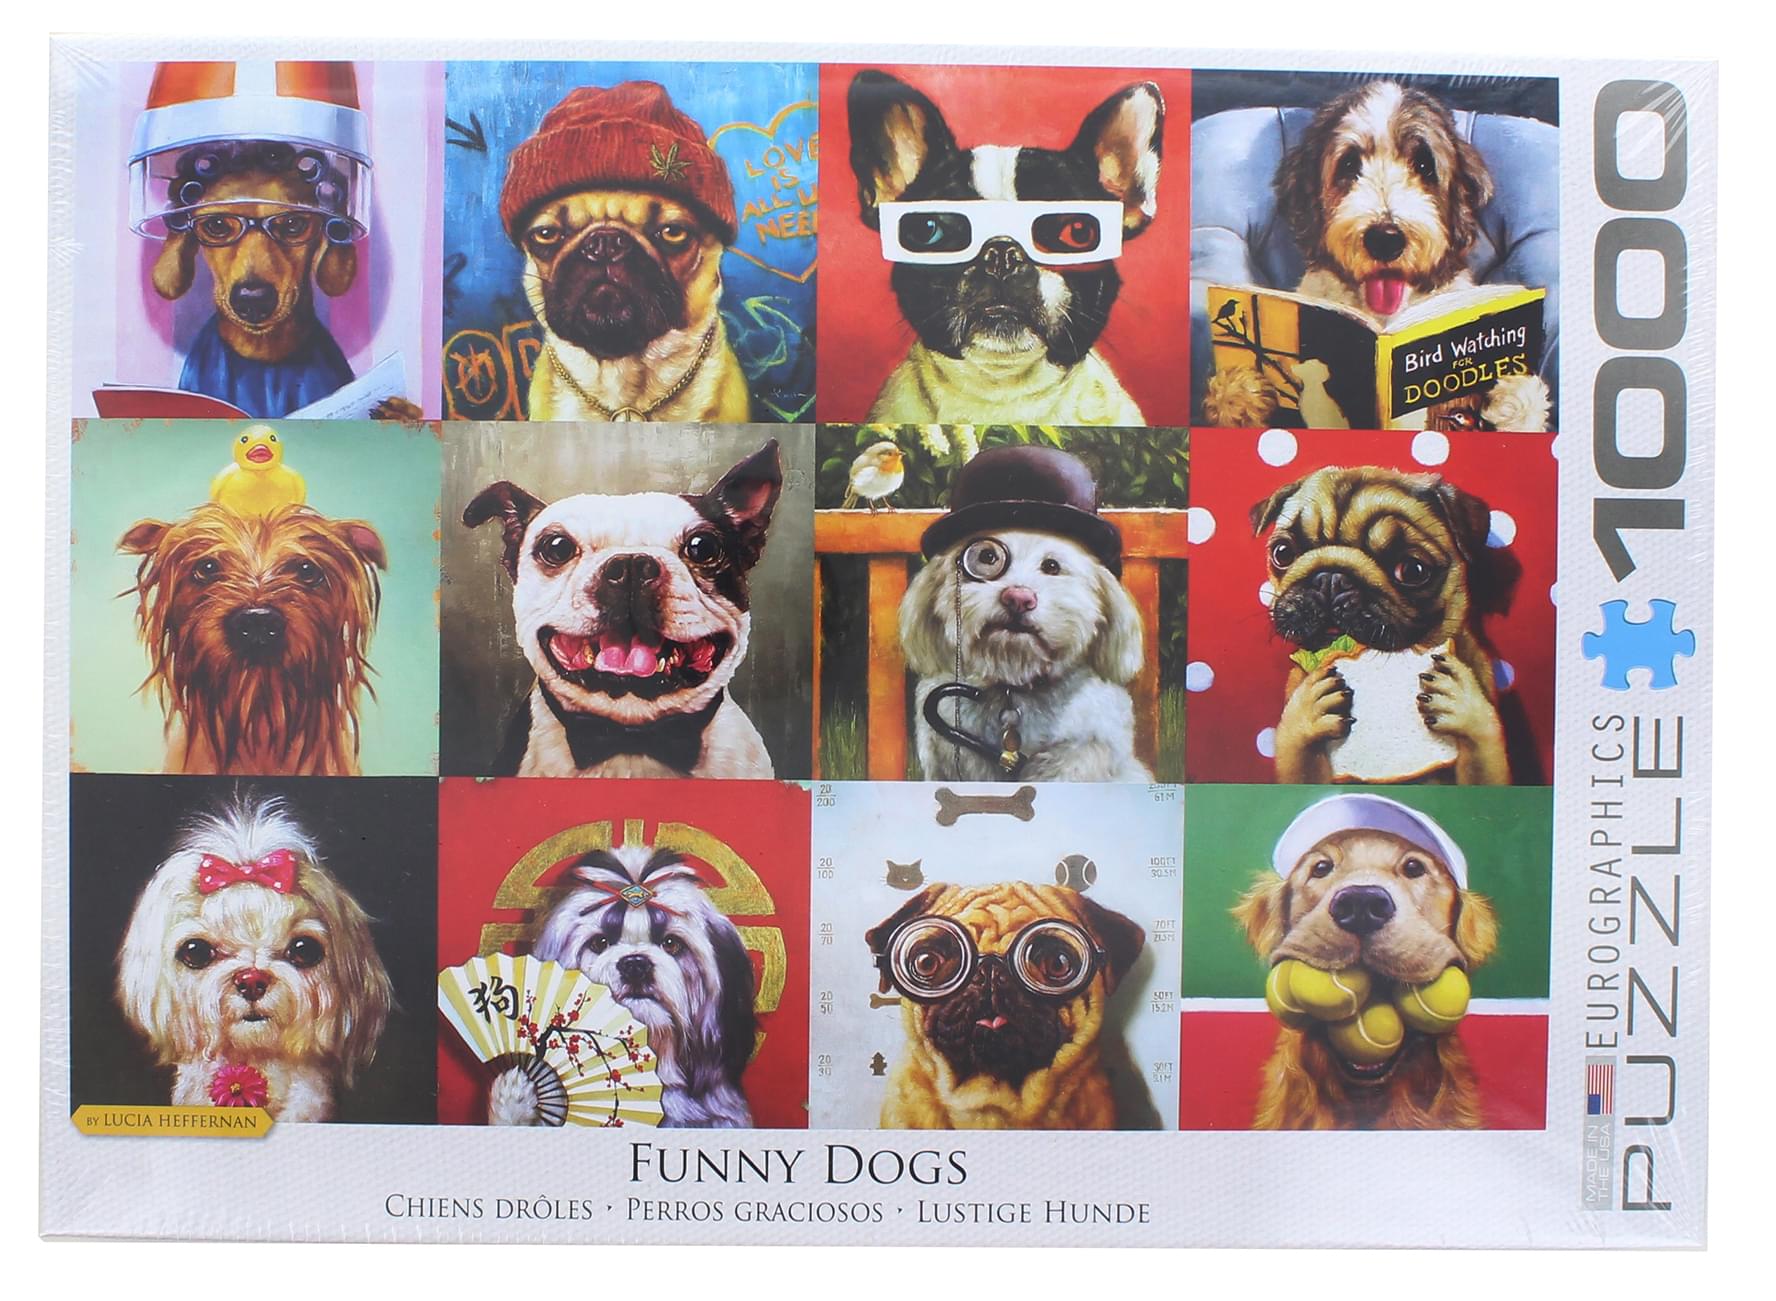 Funny Dogs by Lucia Heffernan 1000 Piece Jigsaw Puzzle